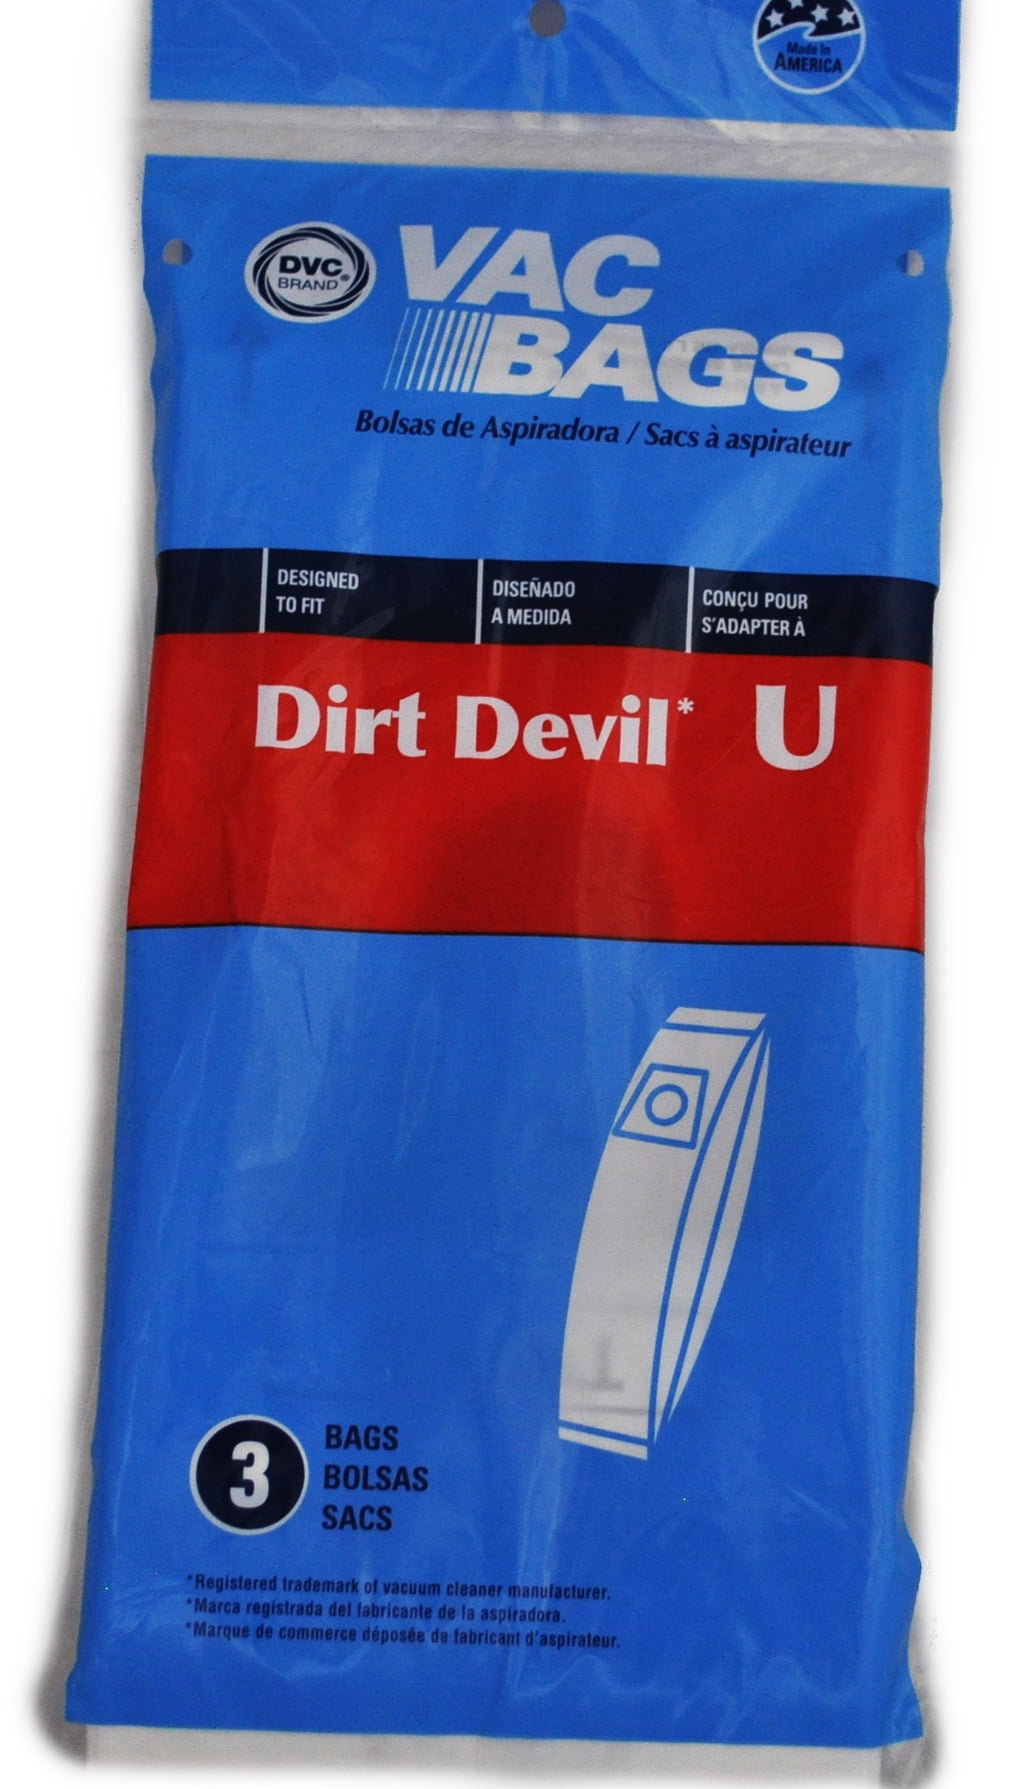 Royal Dirt Devil Type U Upright Vacuum Cleaner Bags, DVC Replacement Brand